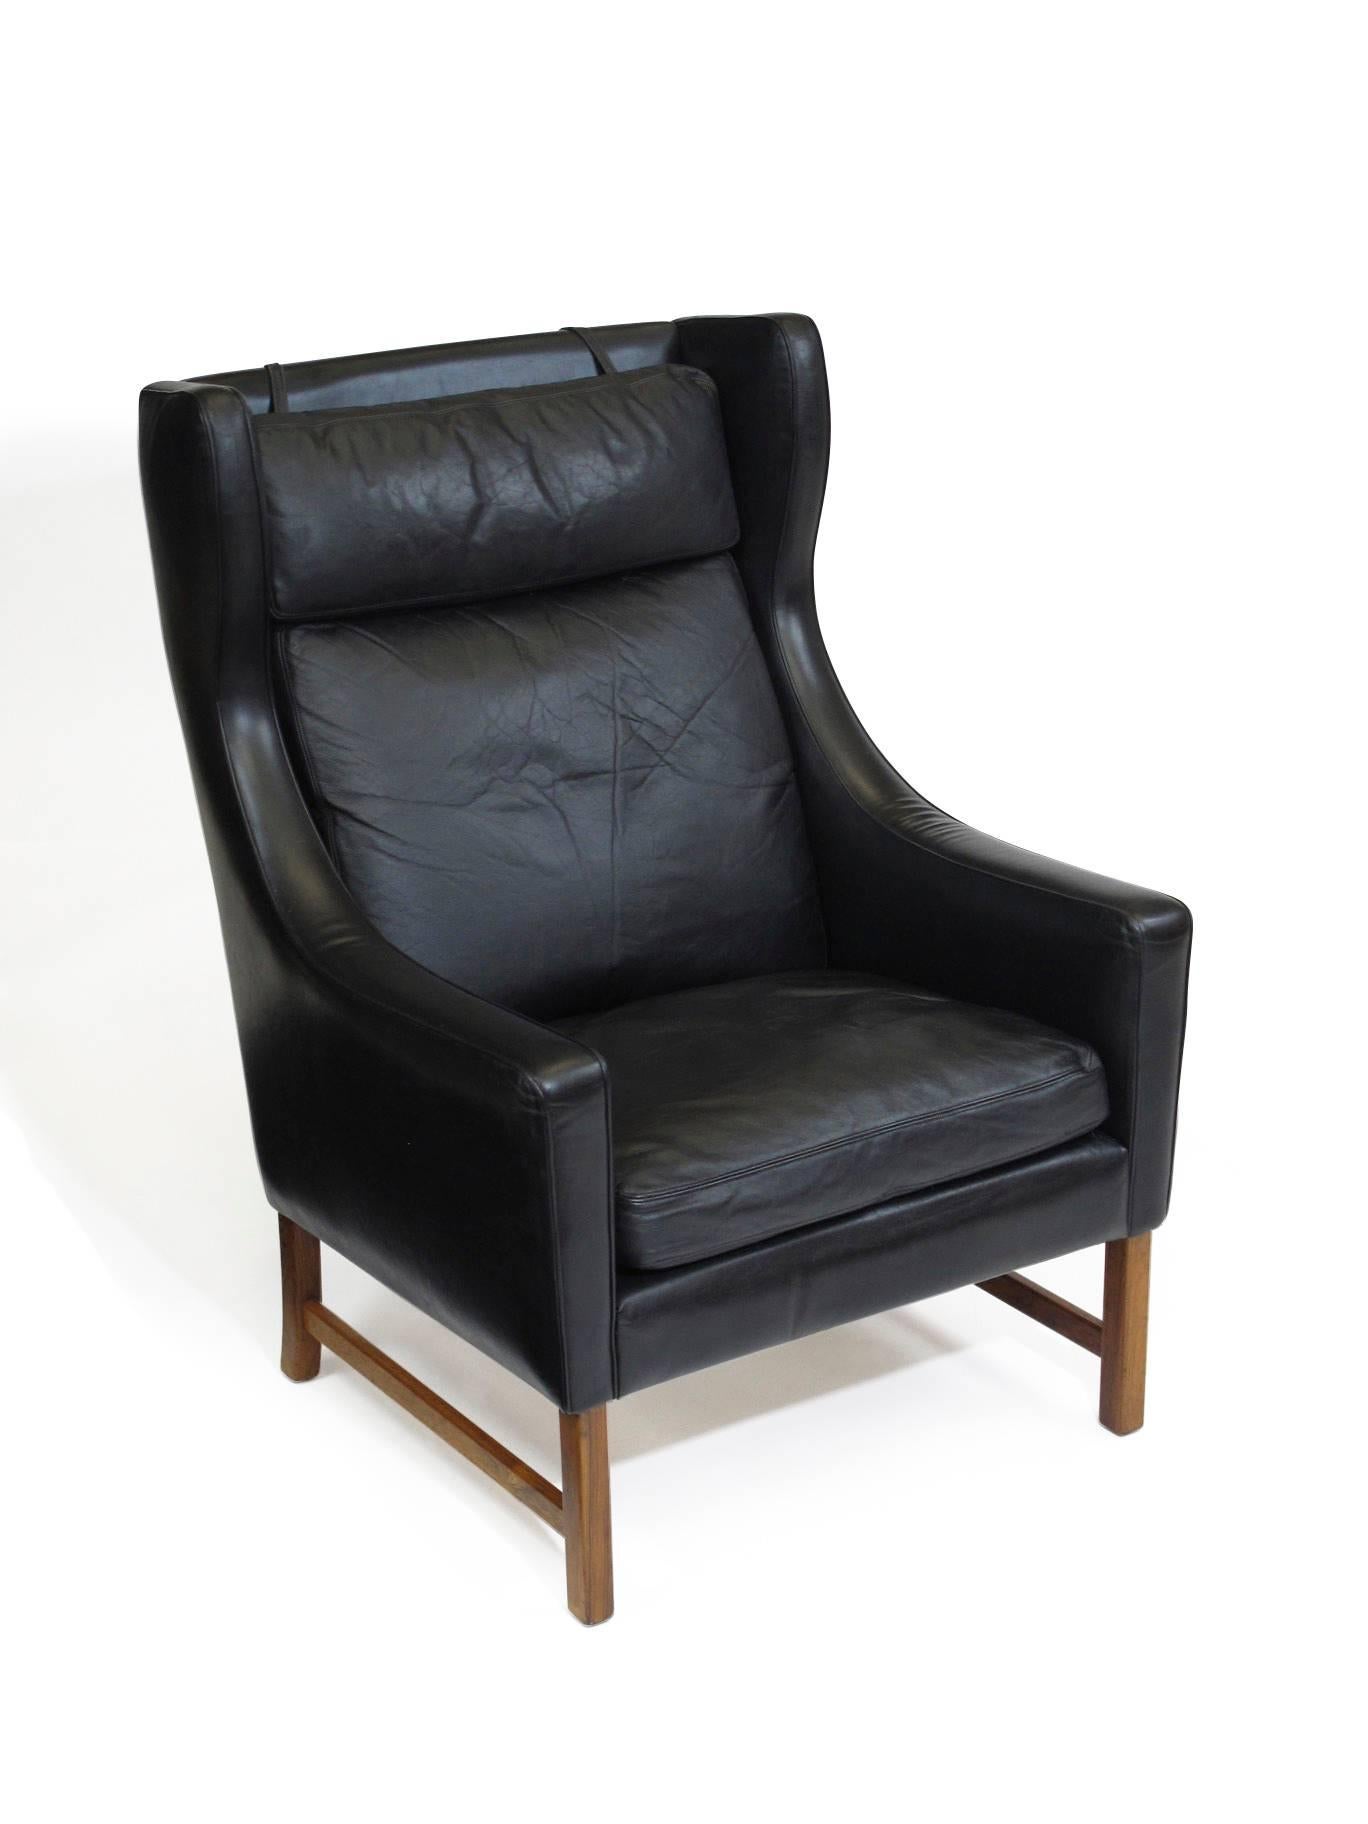 Fredrik Kayser Rosewood and Black Leather High-Back Danish Lounge Chair 1